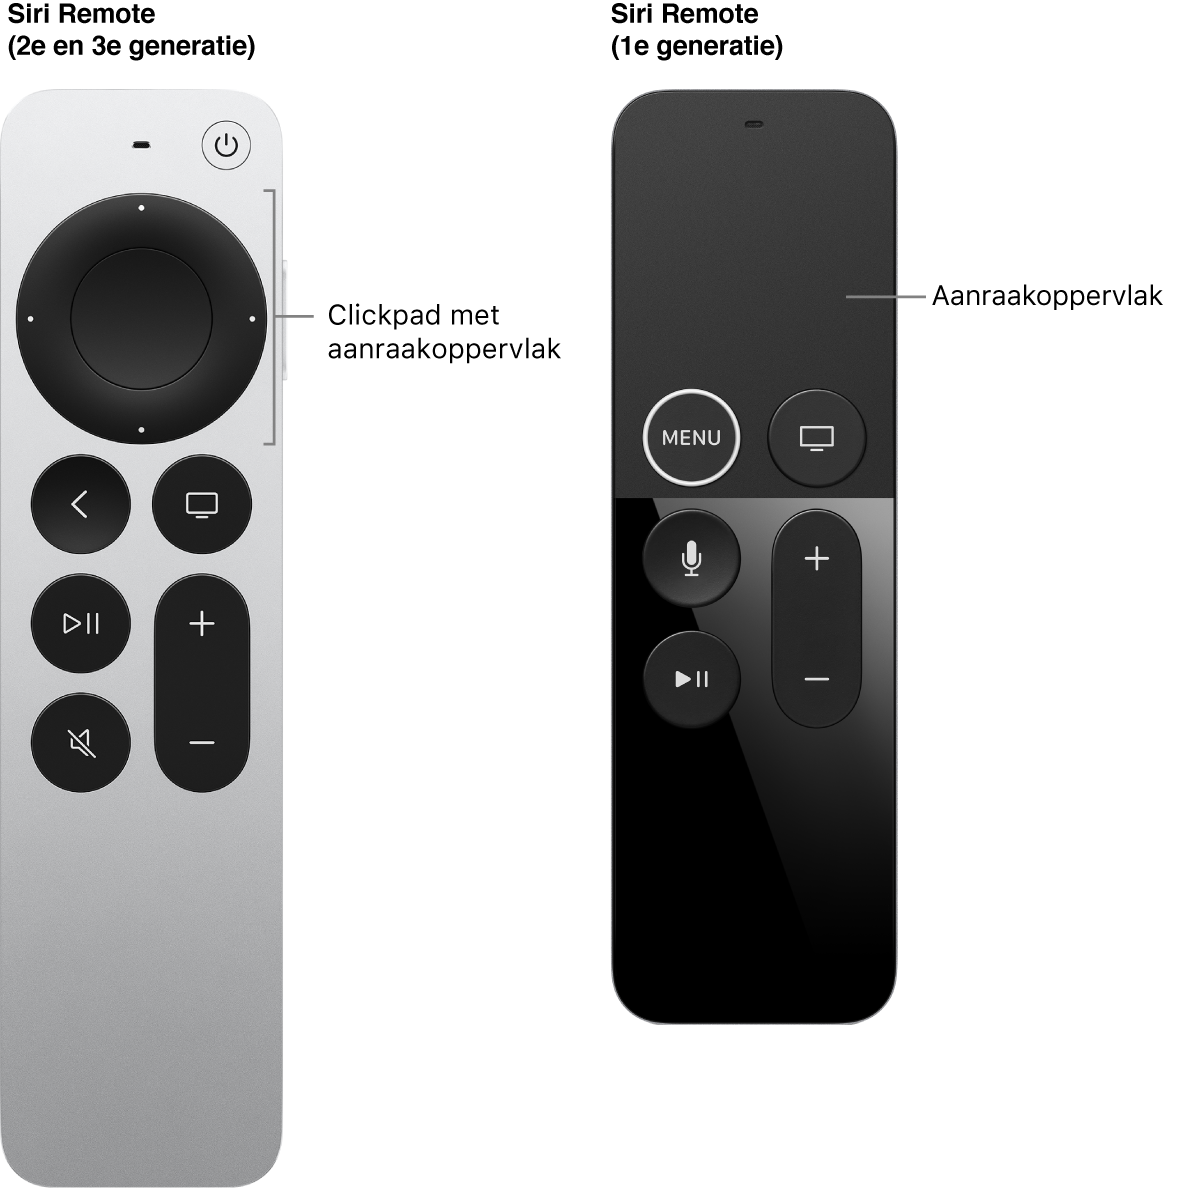 Siri Remote (2e en 3e generatie) met clickpad en Siri Remote (1e generatie) met aanraakoppervlak